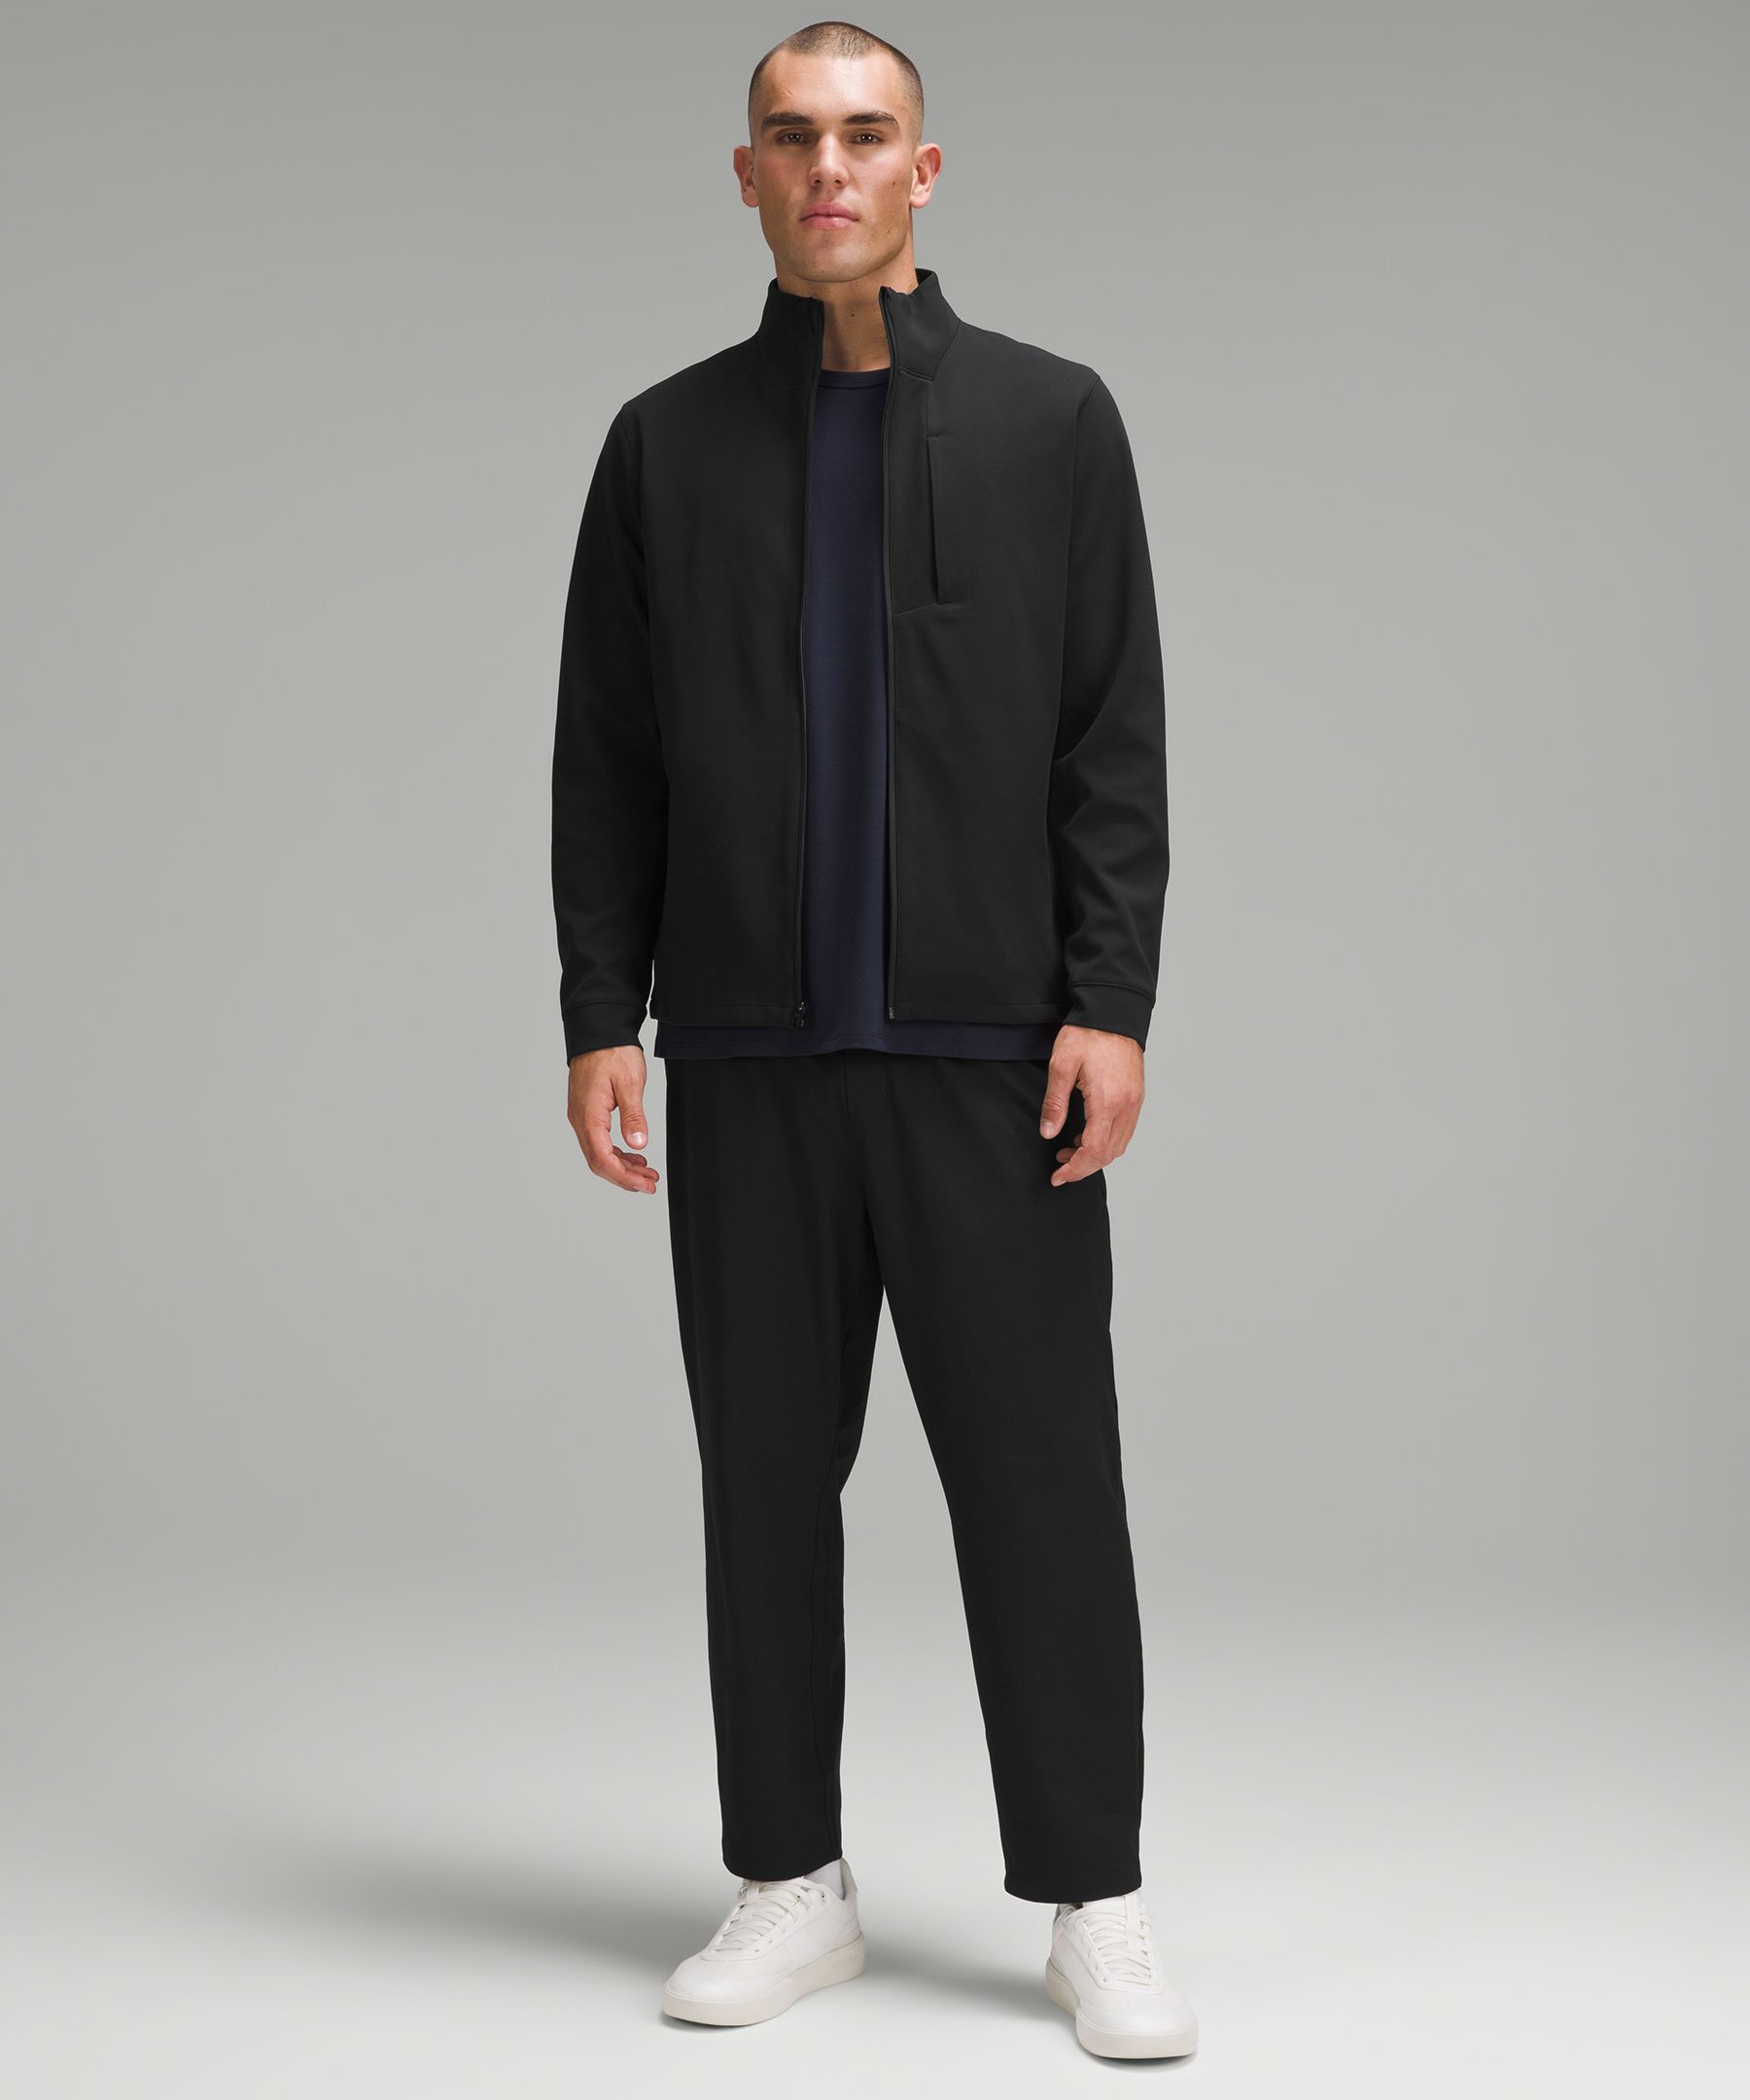 Men's Coats & Jackets | lululemon